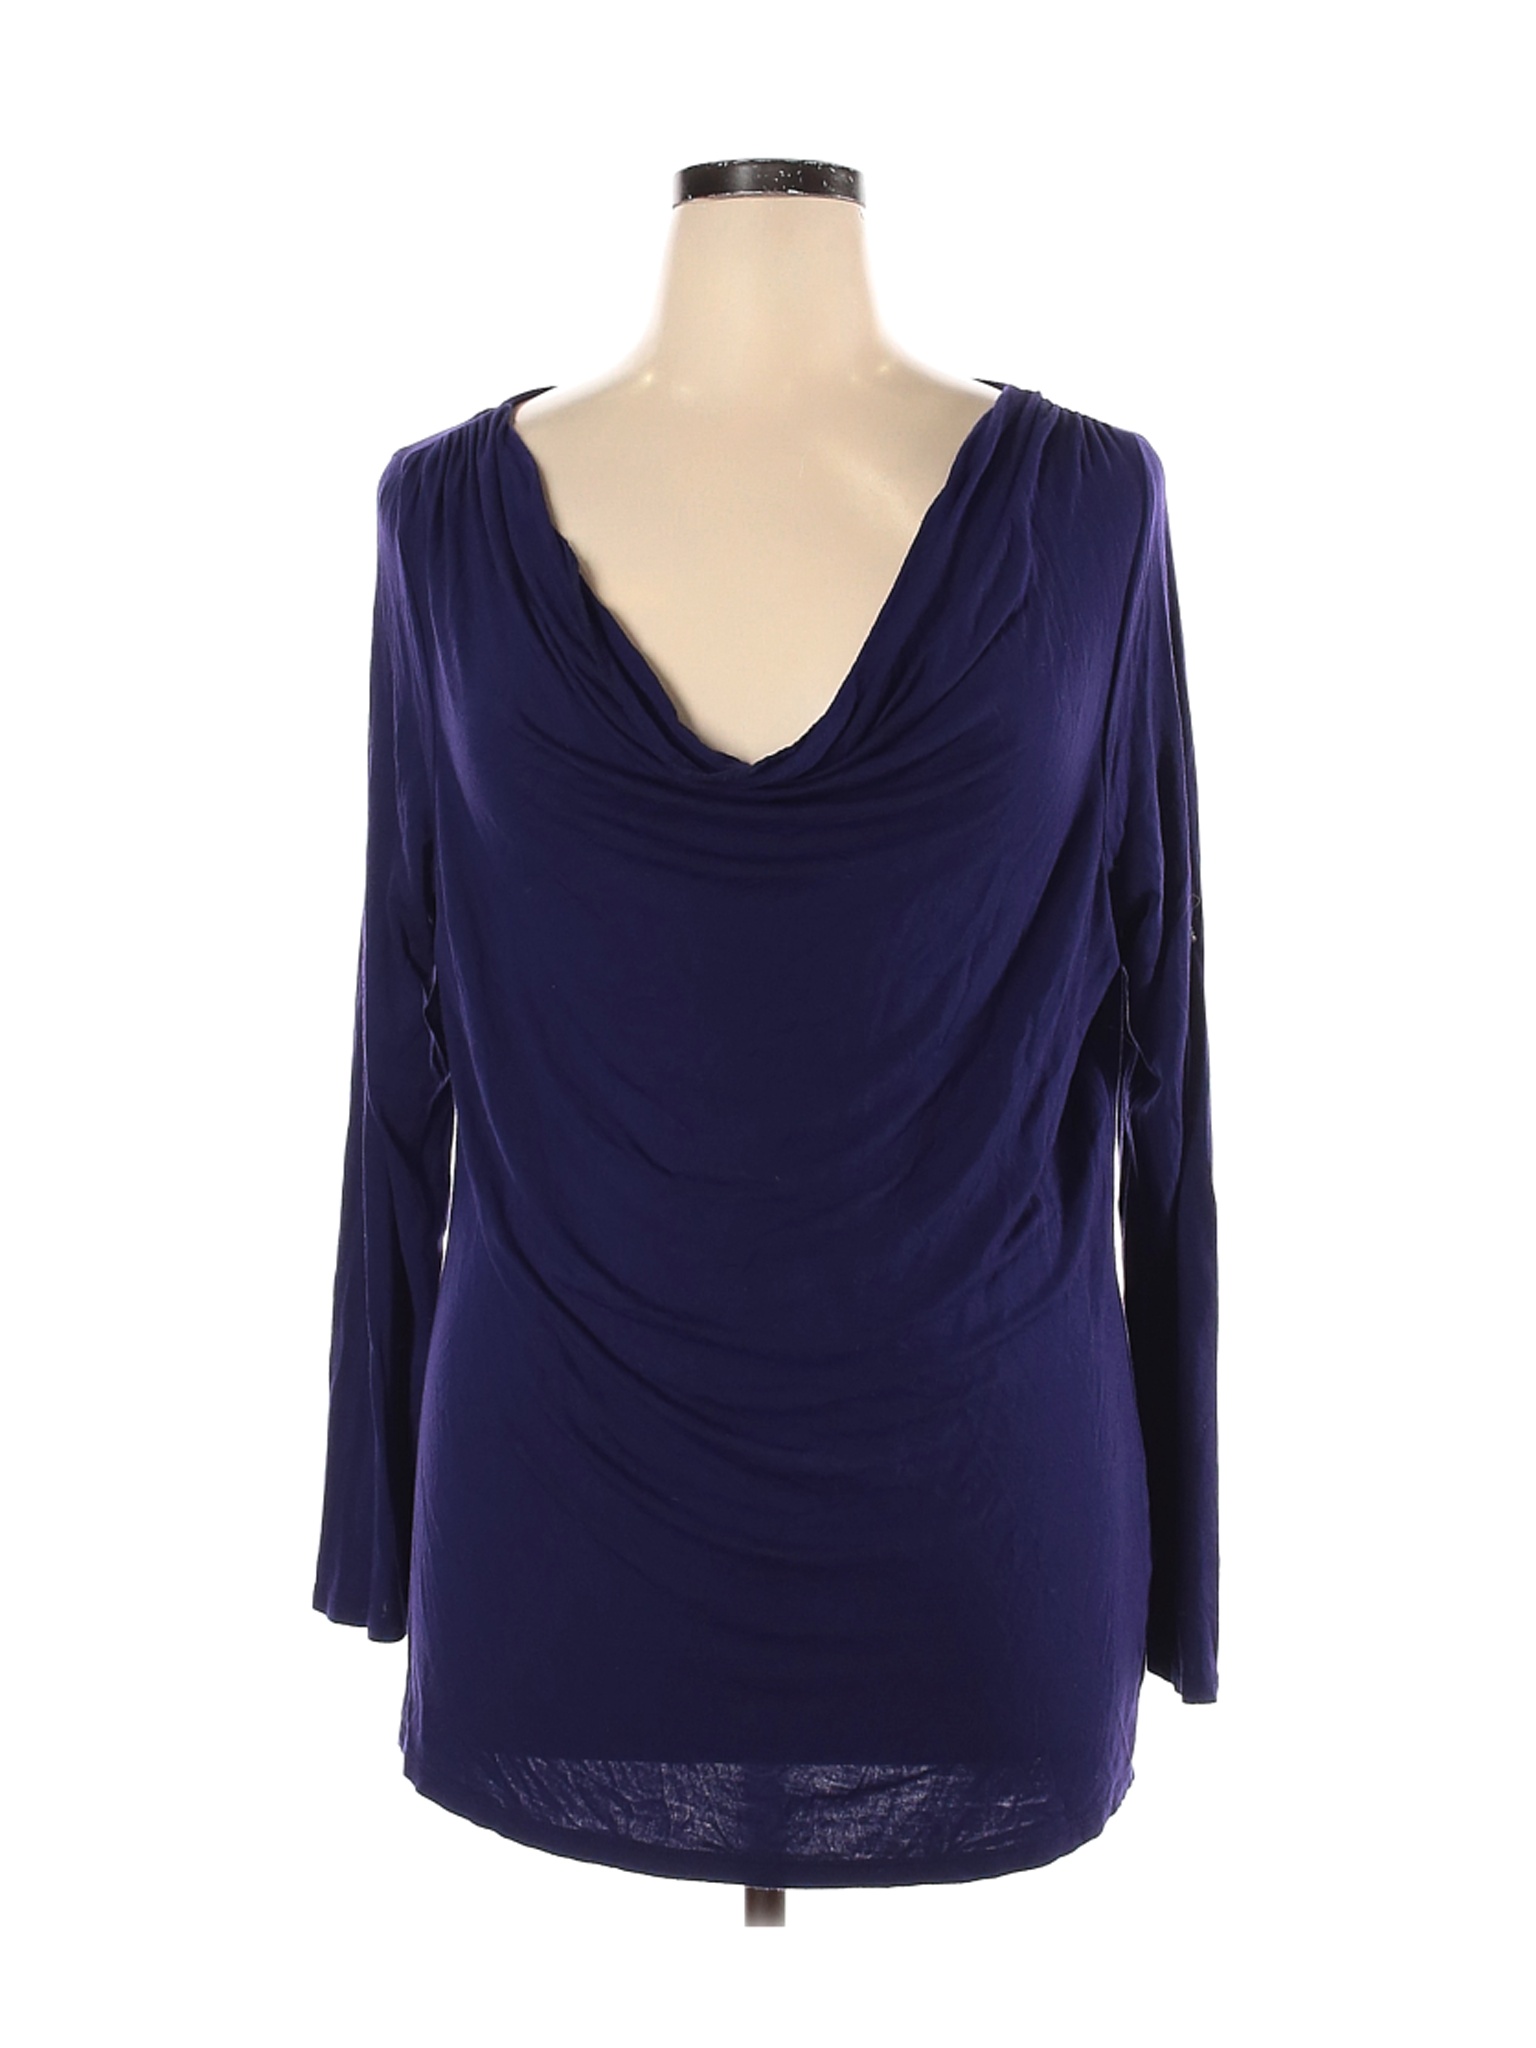 Tahari Women Blue Long Sleeve Top 1X Plus | eBay